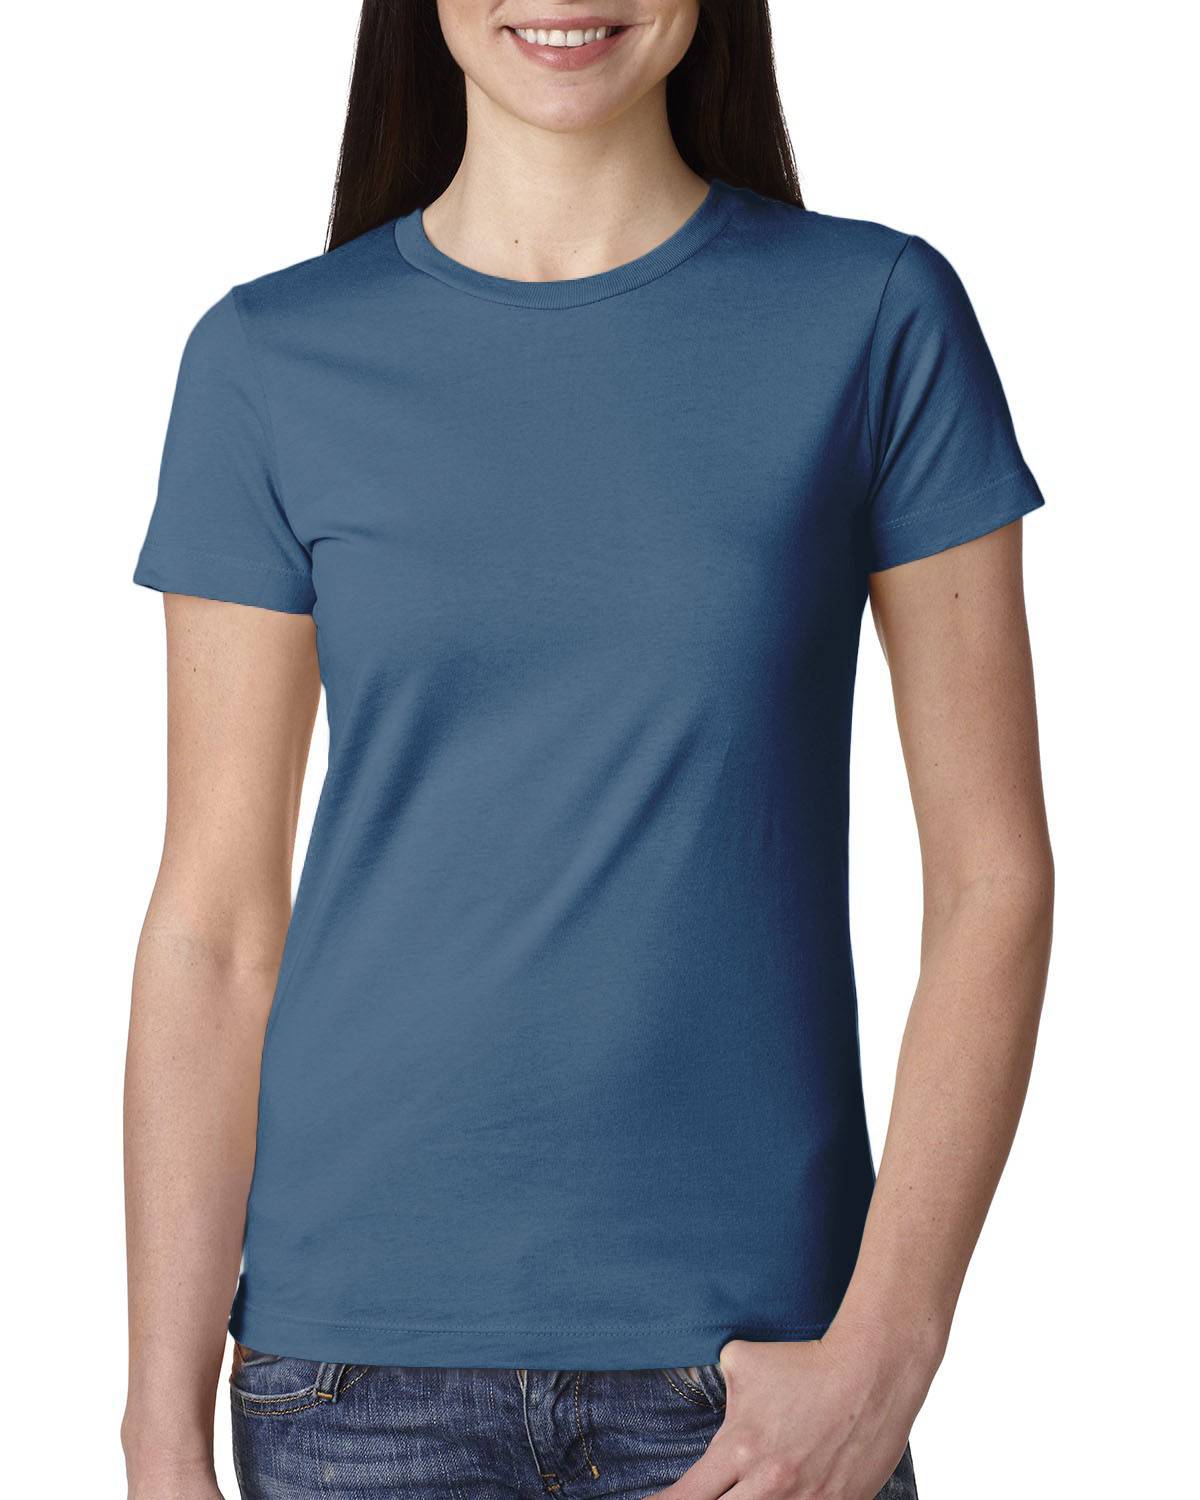 RYDCOT Fashion Women Printing Casual Gradient V-neck Loose T-shirt